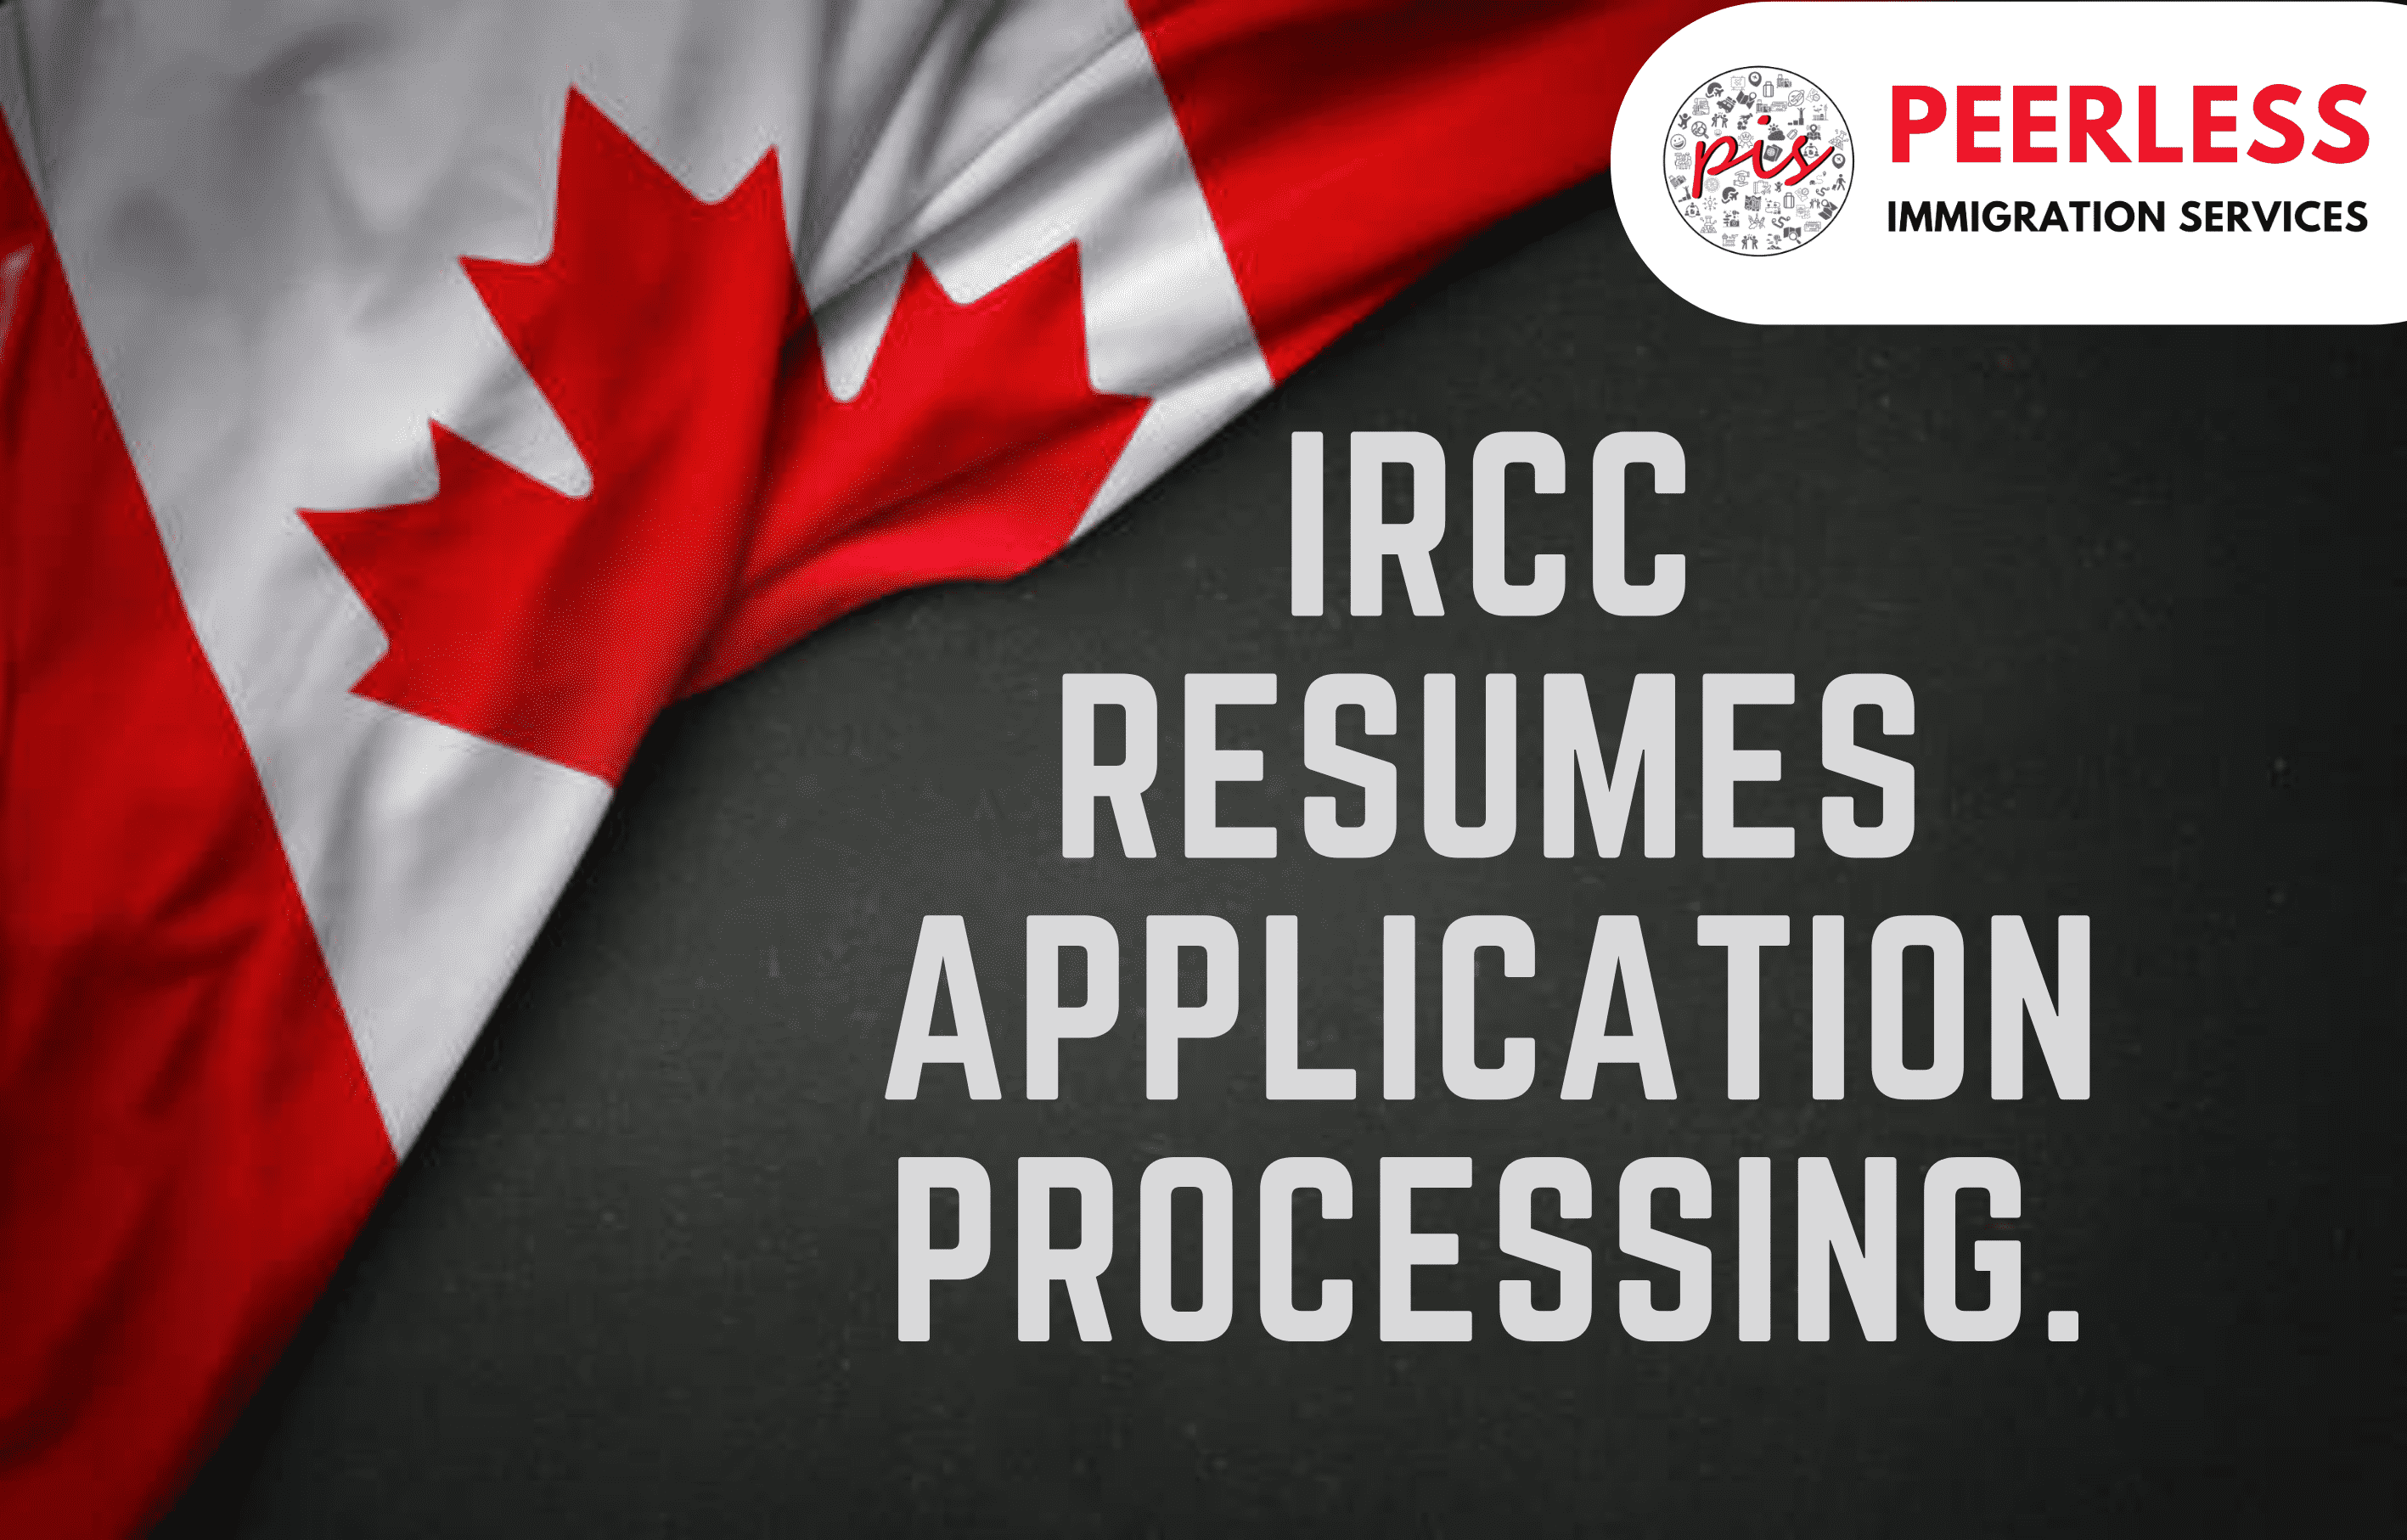 IRCC resumes application processing